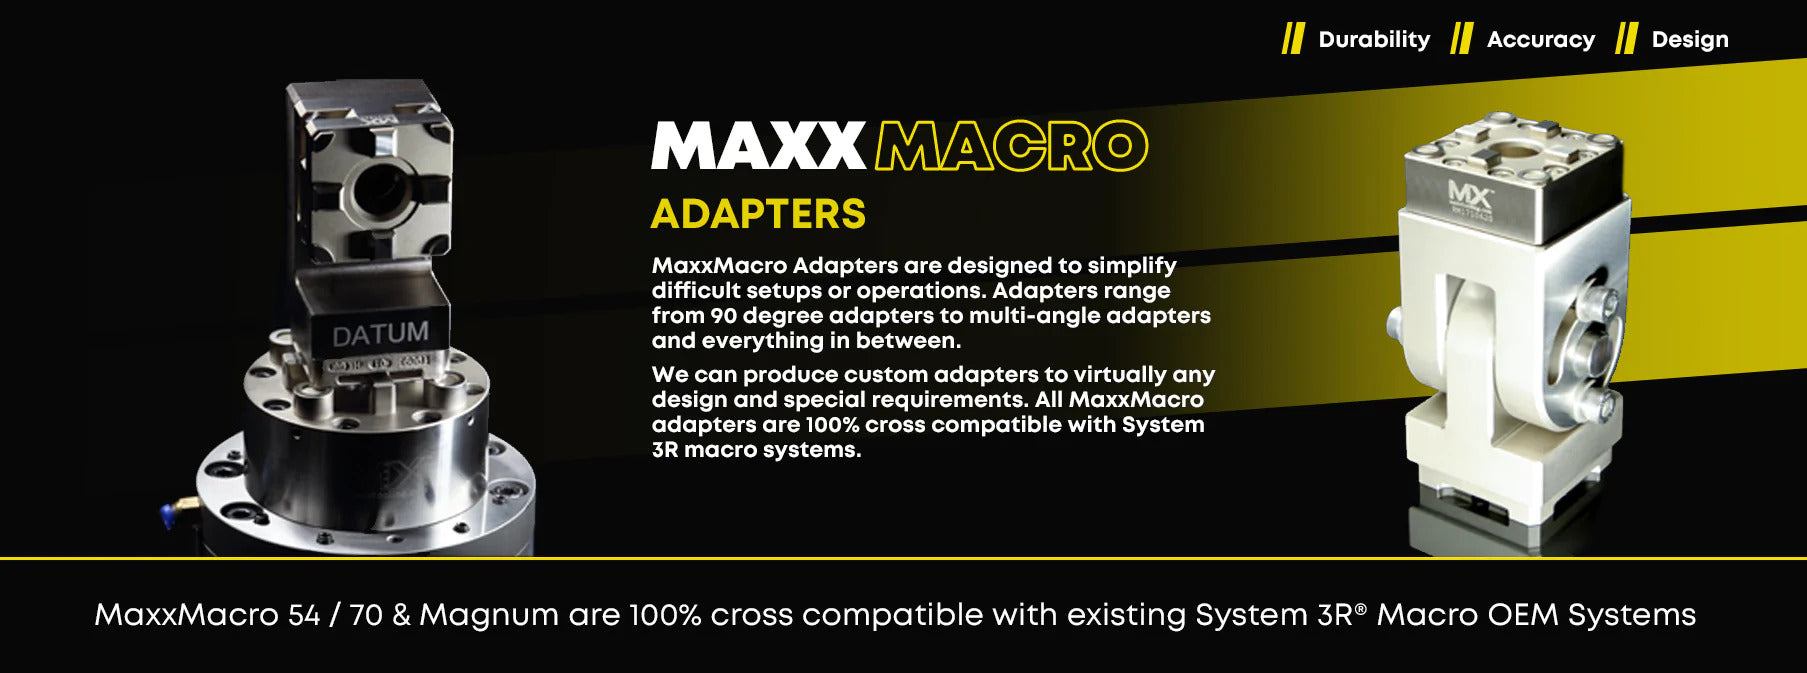 MaxxMacro Adapters